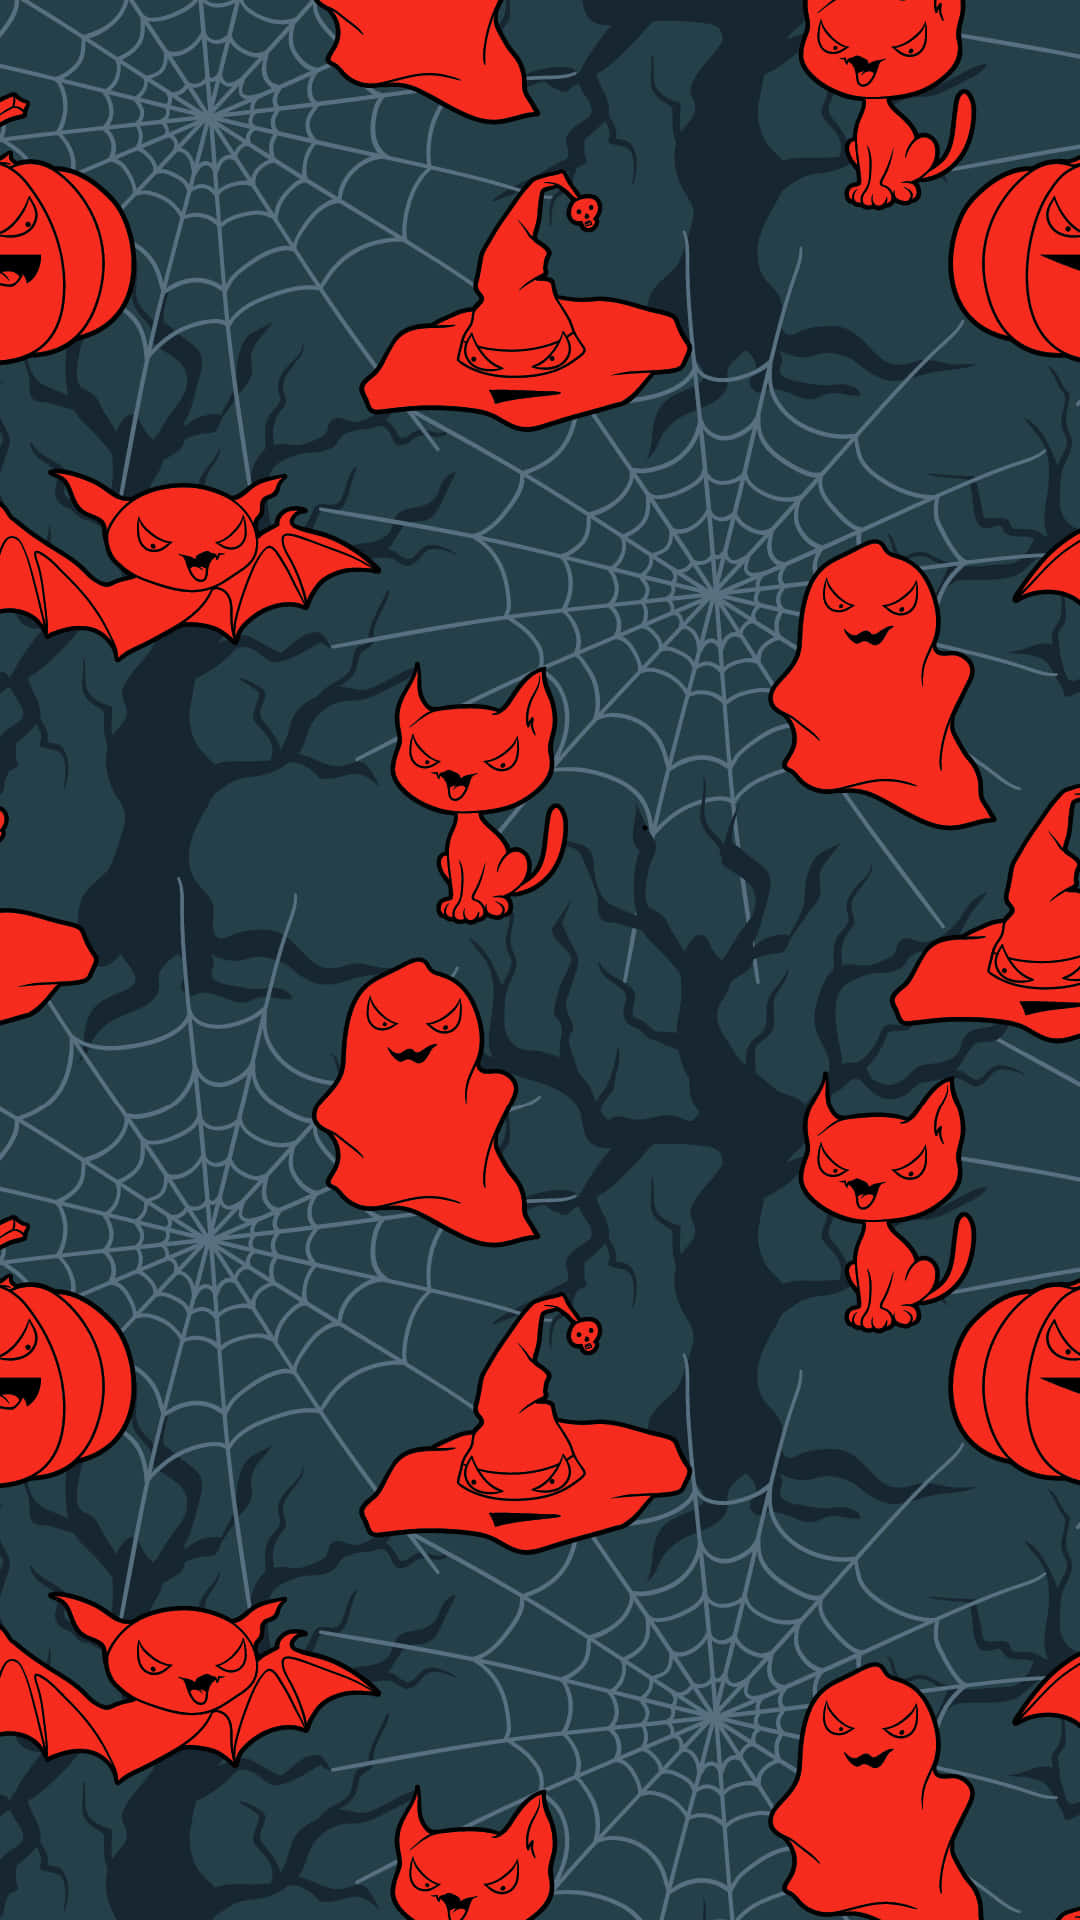 Free Halloween iPhone Wallpapers